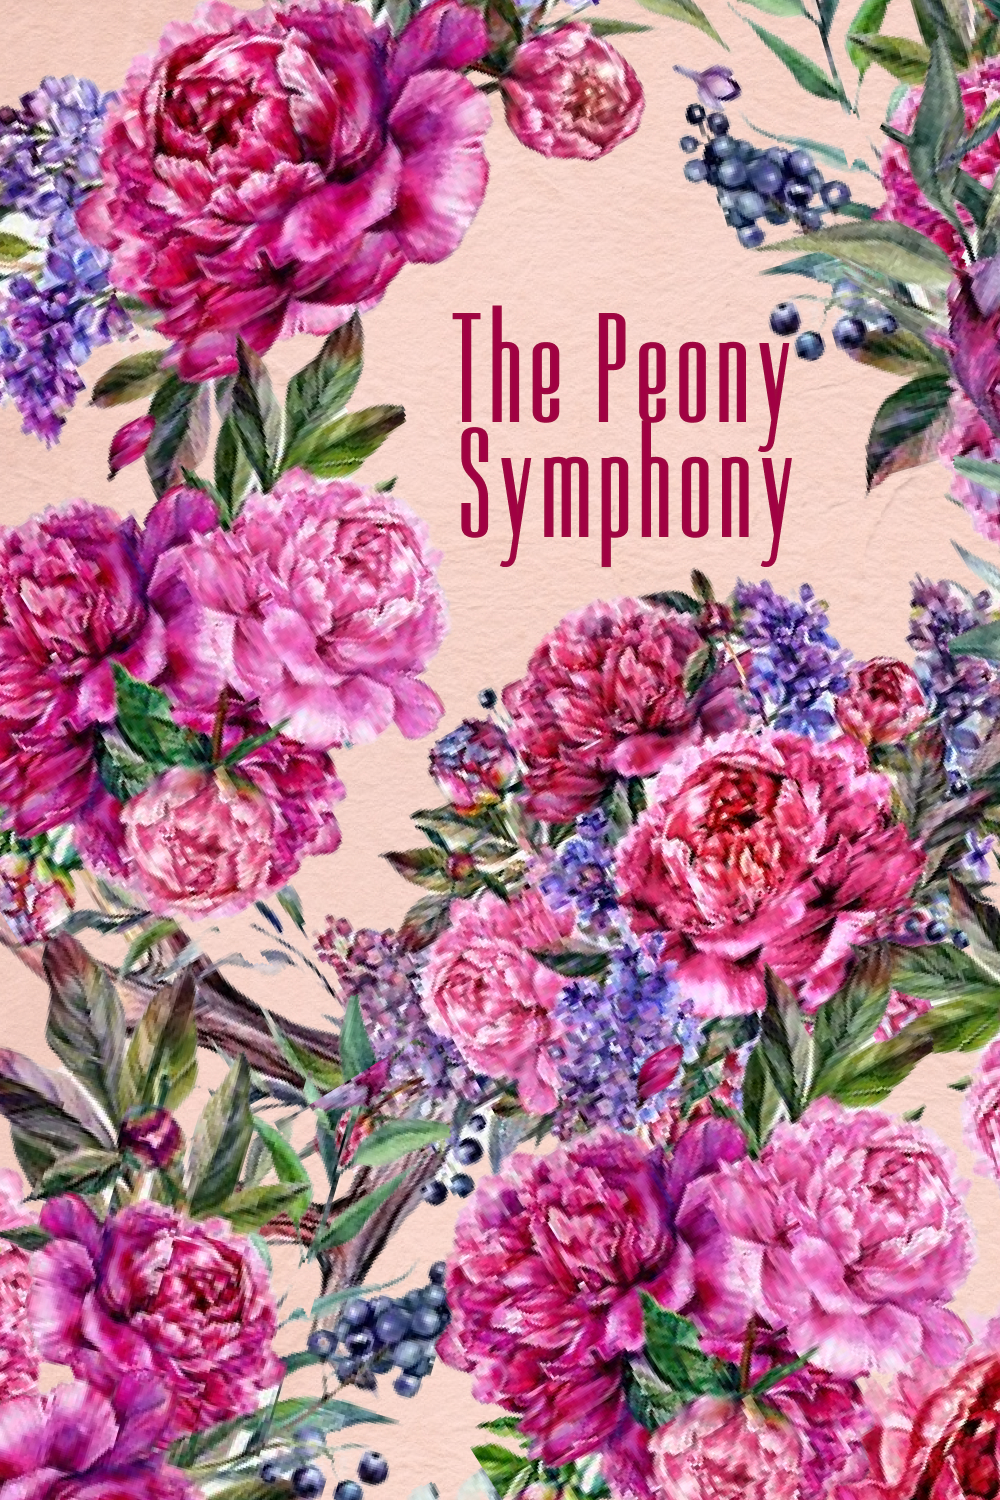 The peony symphony.